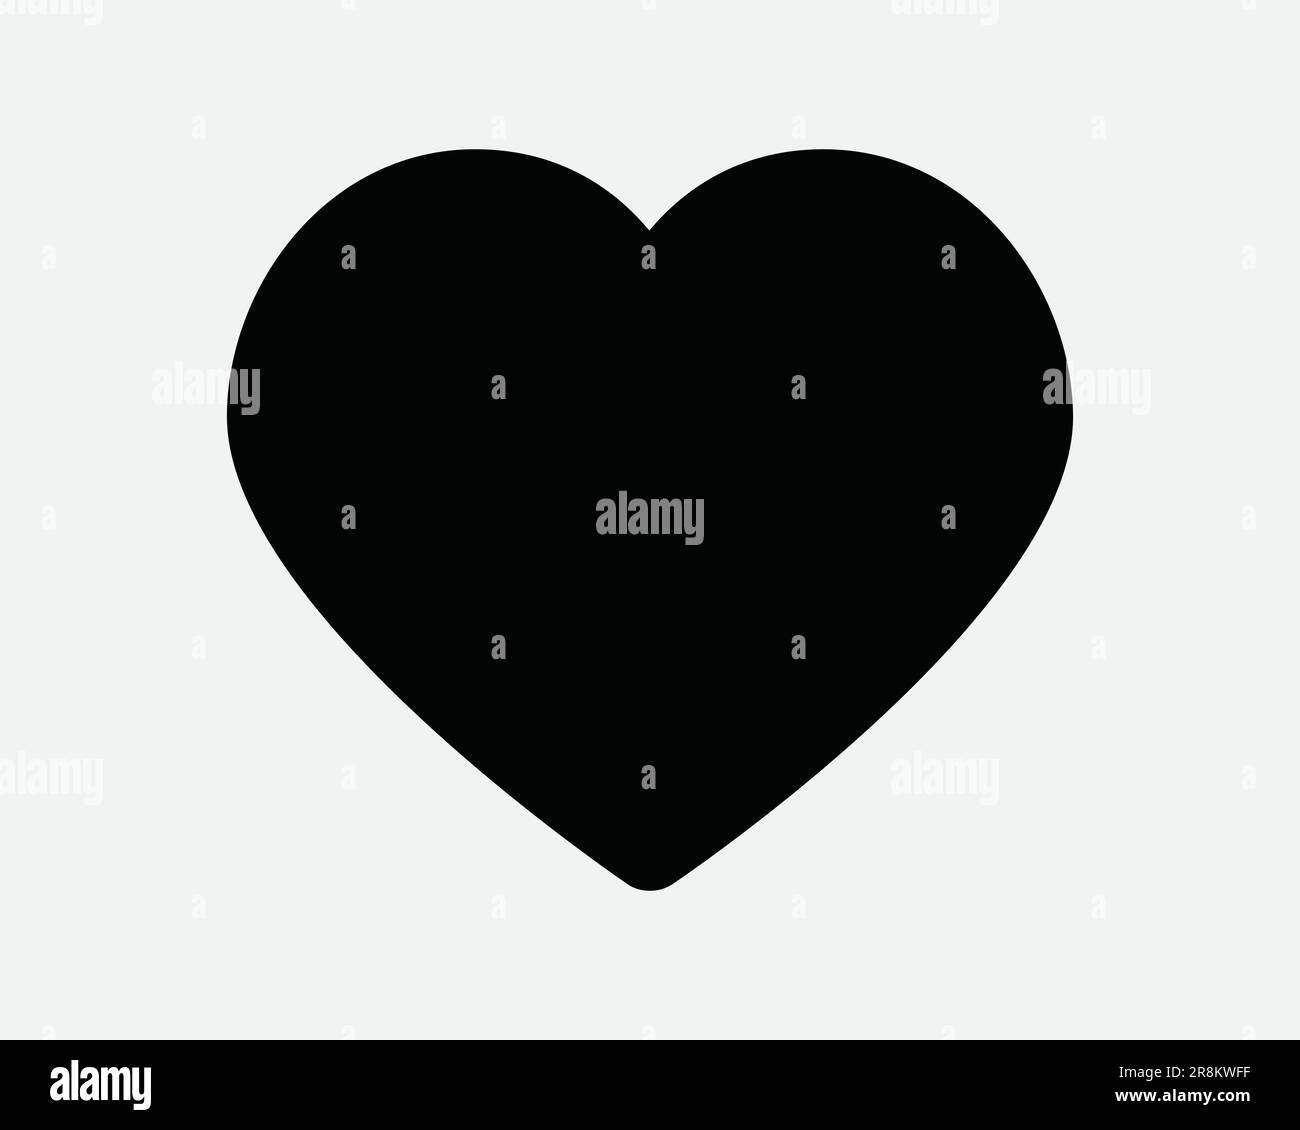 Heart Shape Icon. Love Beat Valentine Romance Romantic Loving Lover Care. Black and White Sign Symbol Illustration Artwork Graphic Clipart EPS Vector Stock Vector